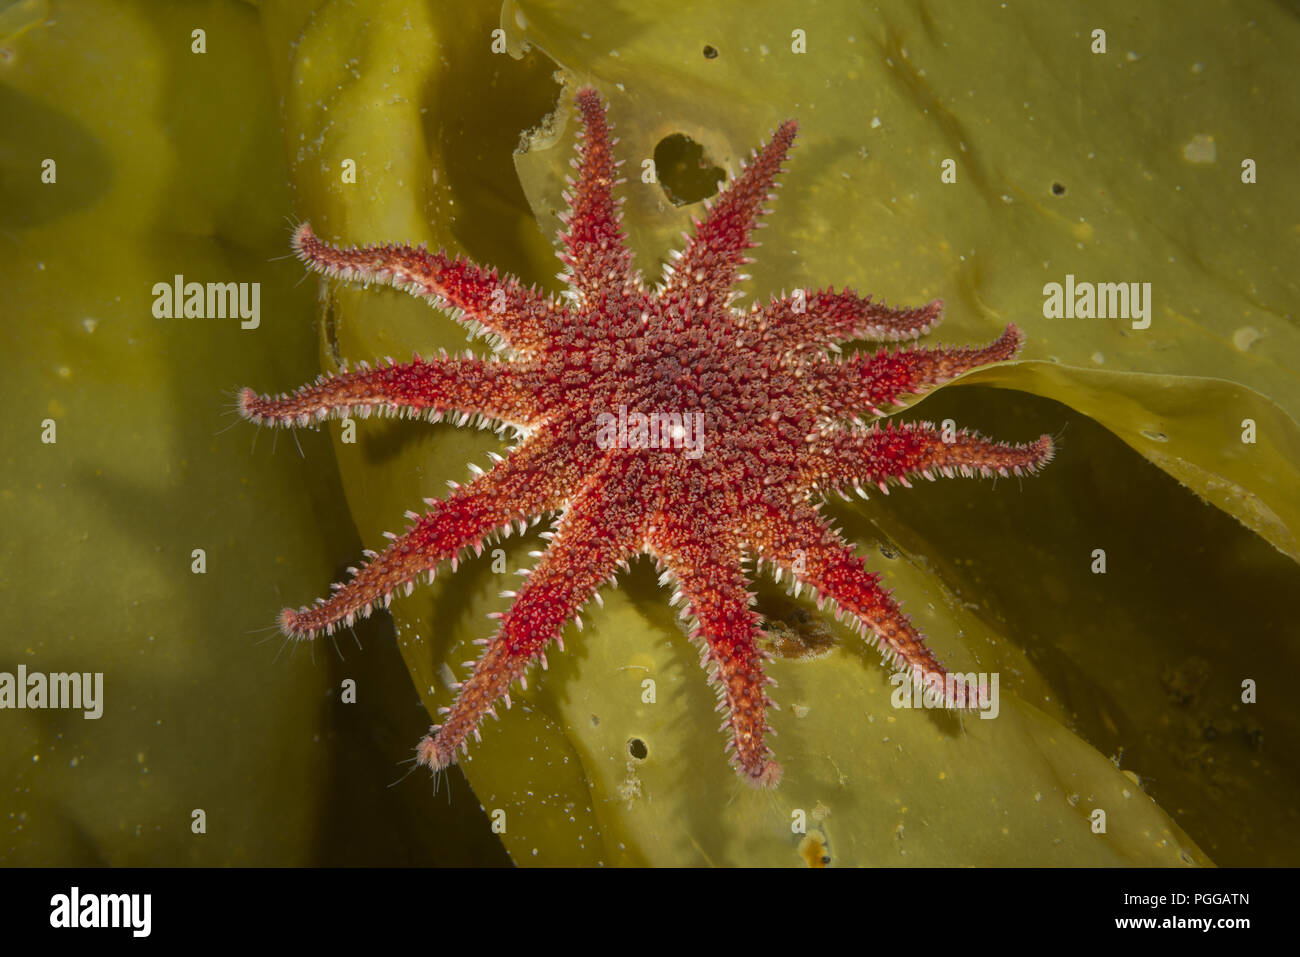 Snowflake Star or Common Sun Star (Crossaster papposus) on laminaria Stock Photo